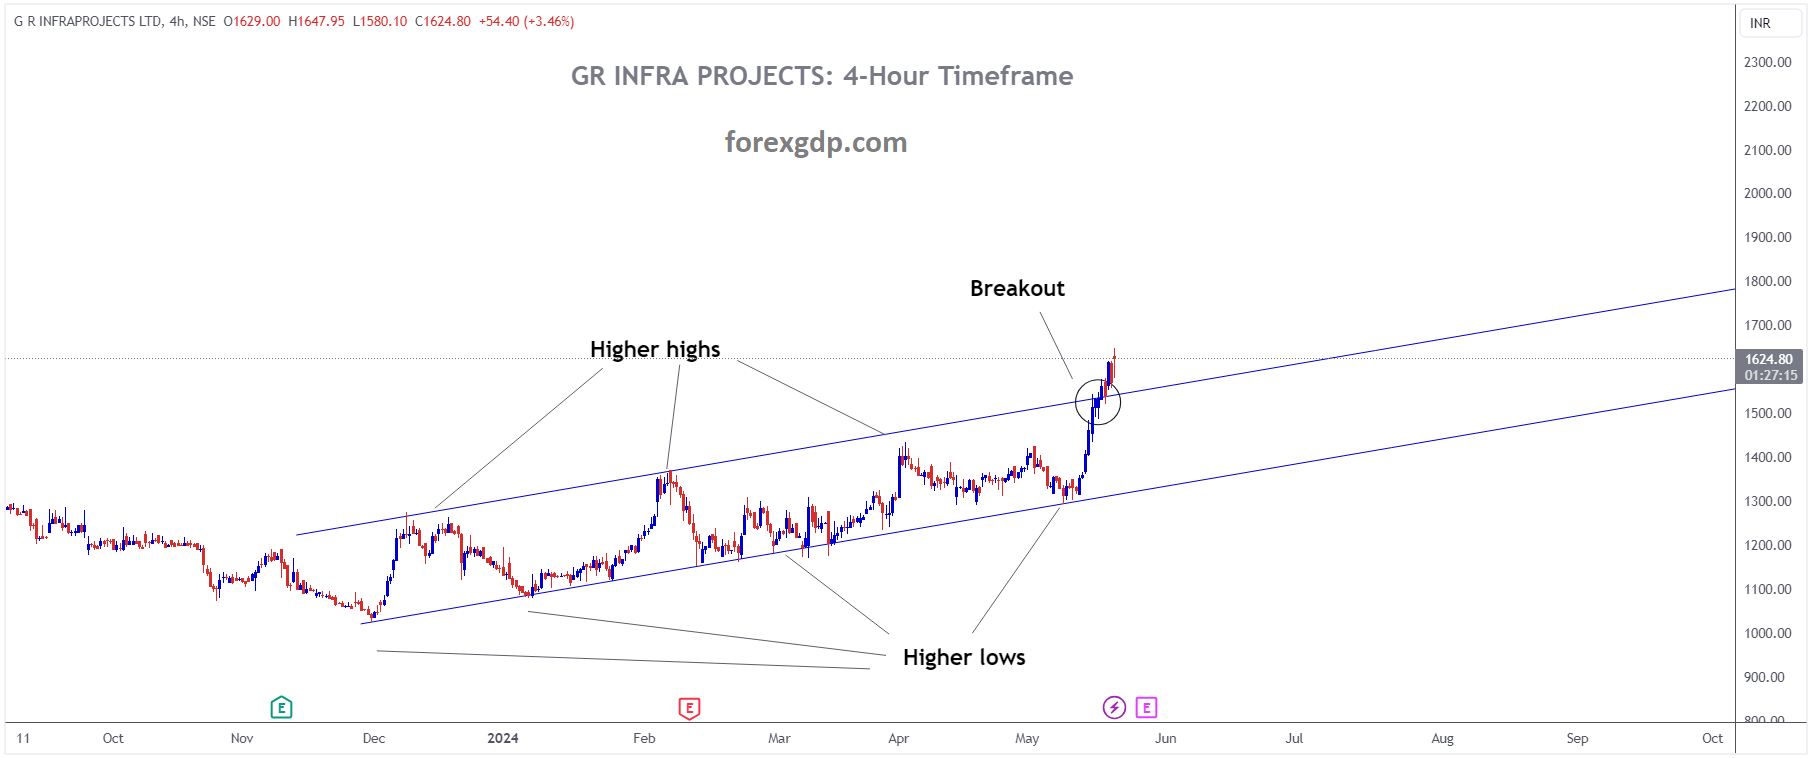 G R INFRAPROJECTS Market price has broken Ascending channel in upside